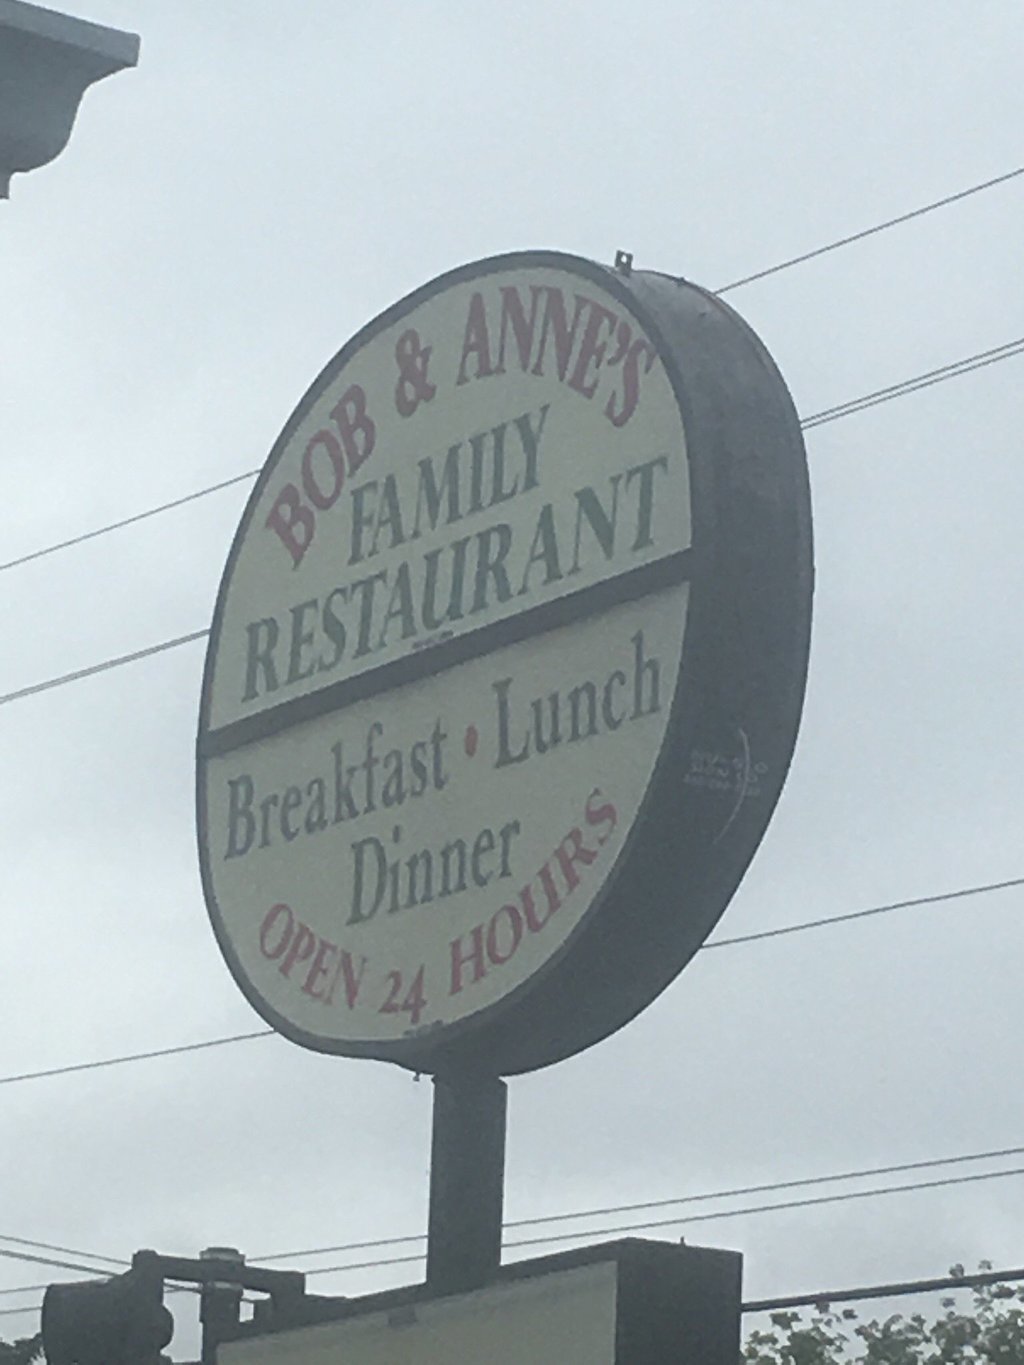 Bob & Ann`s Restaurant